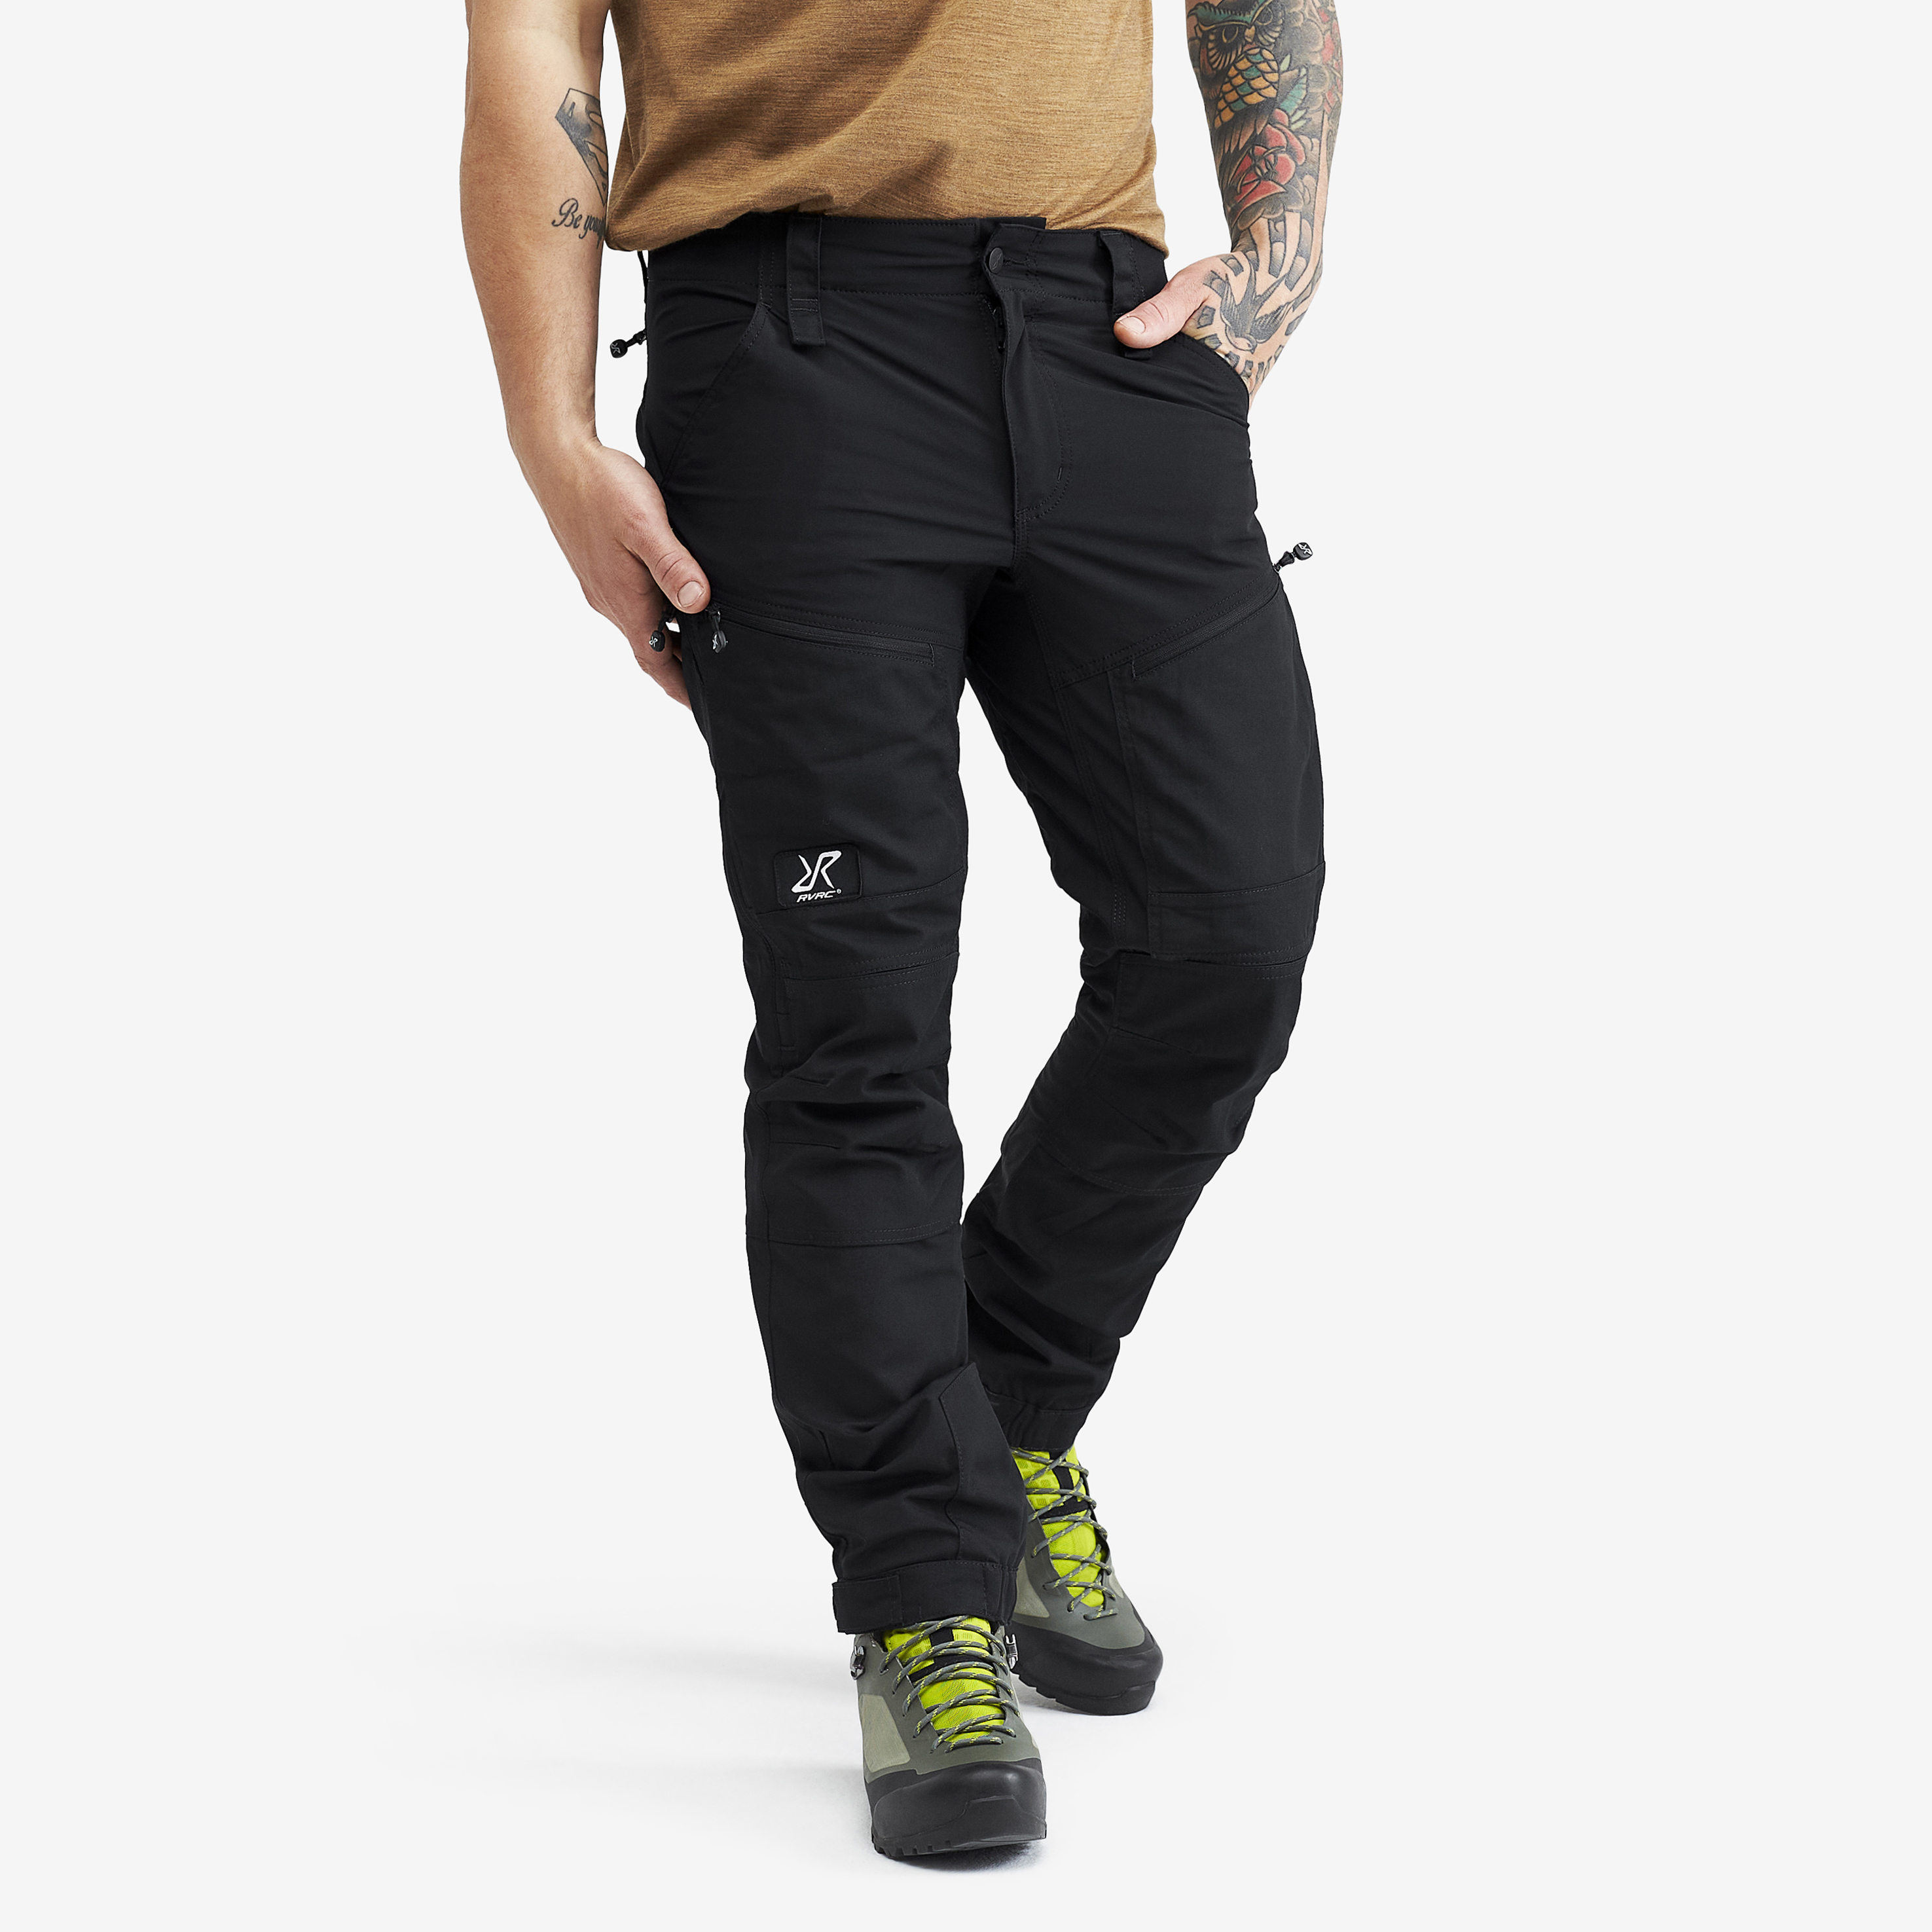 RVRC GP Pro Short hiking trousers for men in black